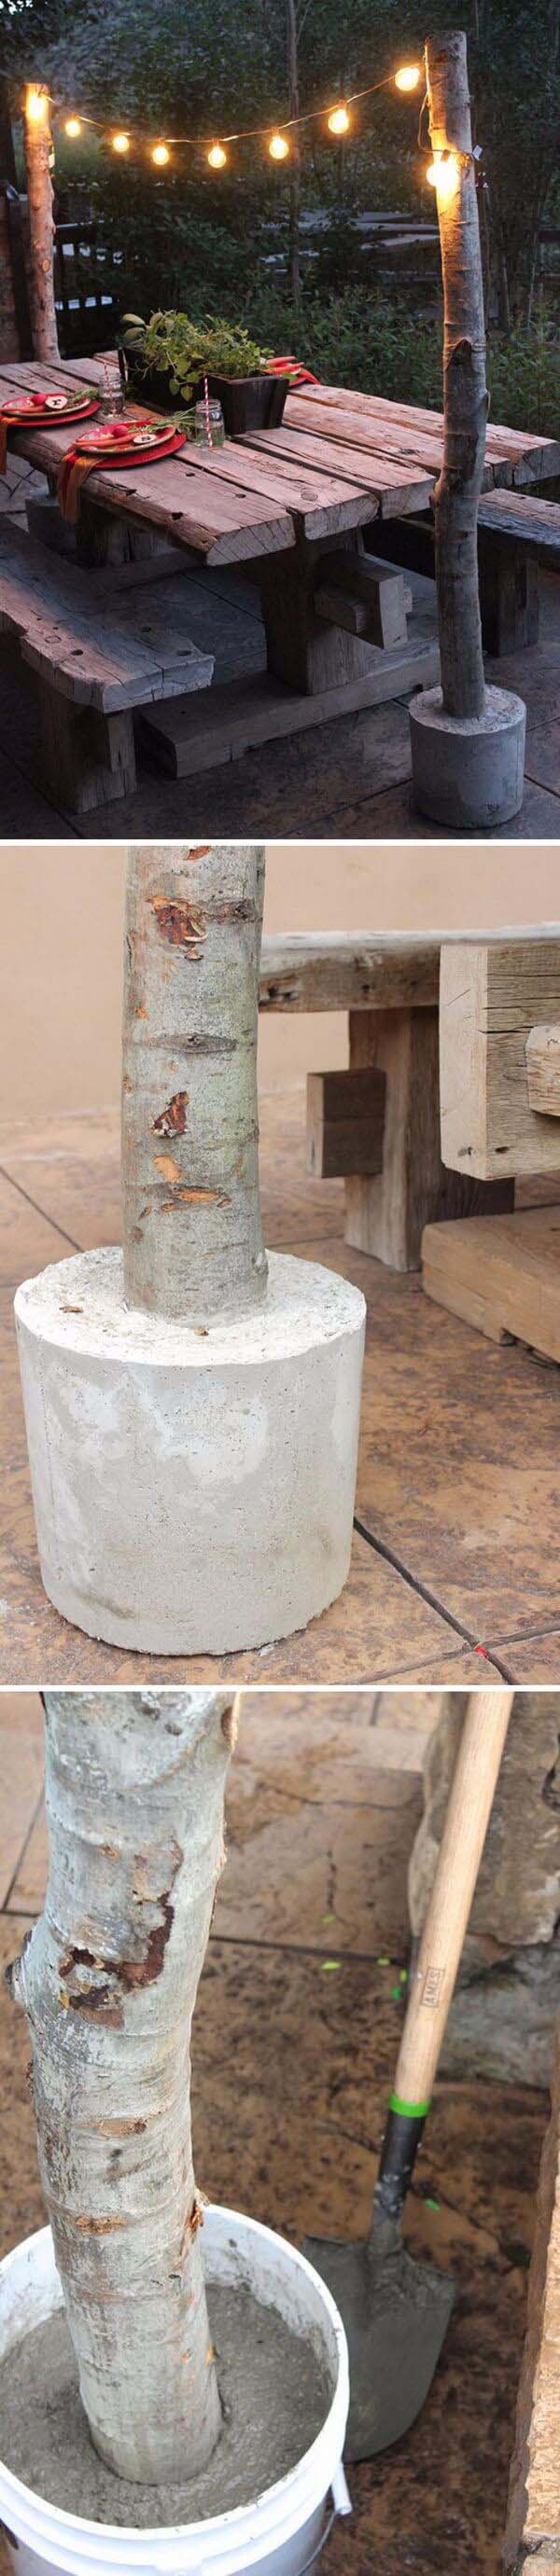 DIY String Light Poles With Concrete Bases #diy #concrete #backyard #decorhomeideas